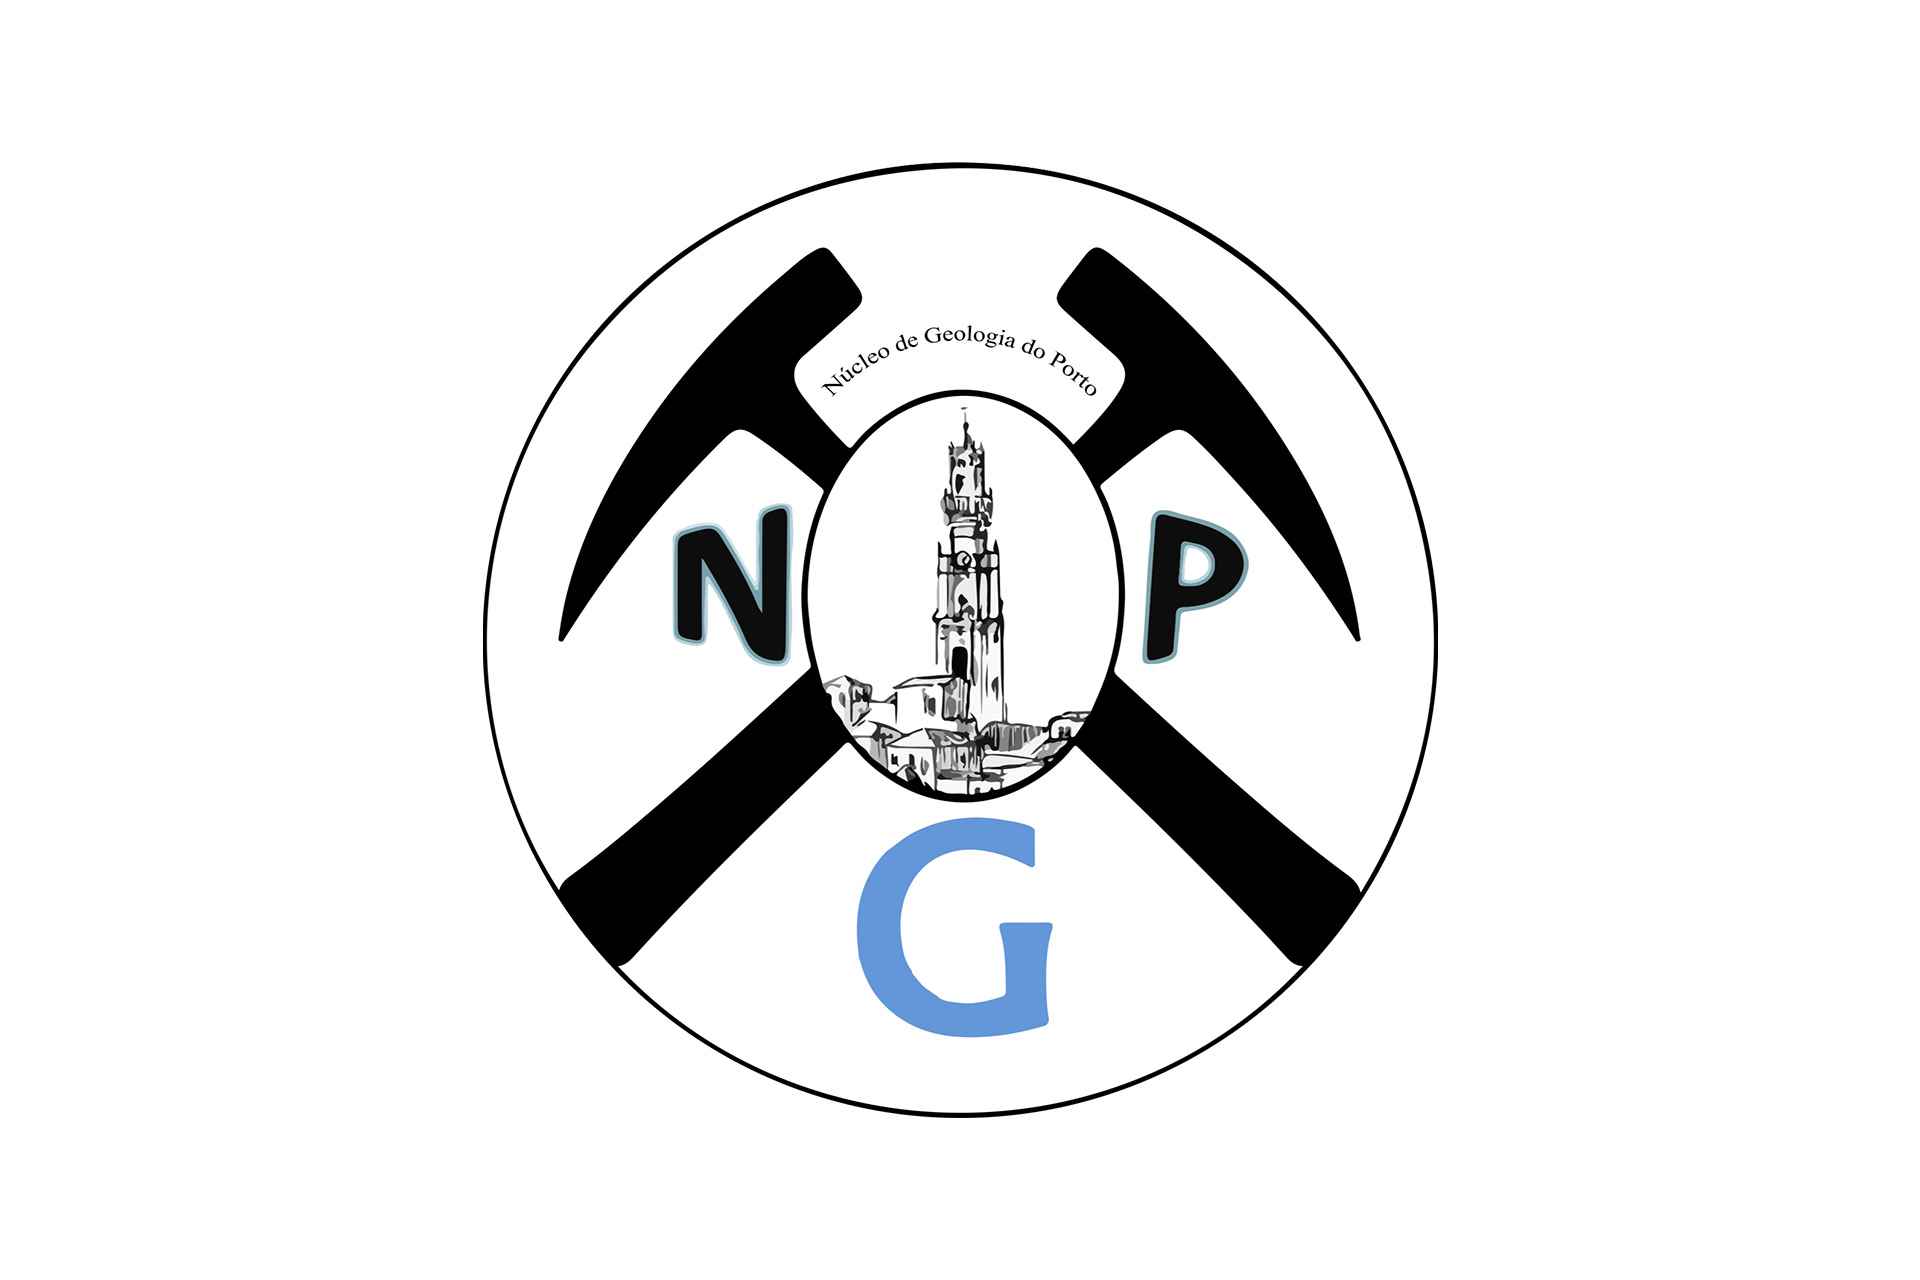 NGP Student Center logo